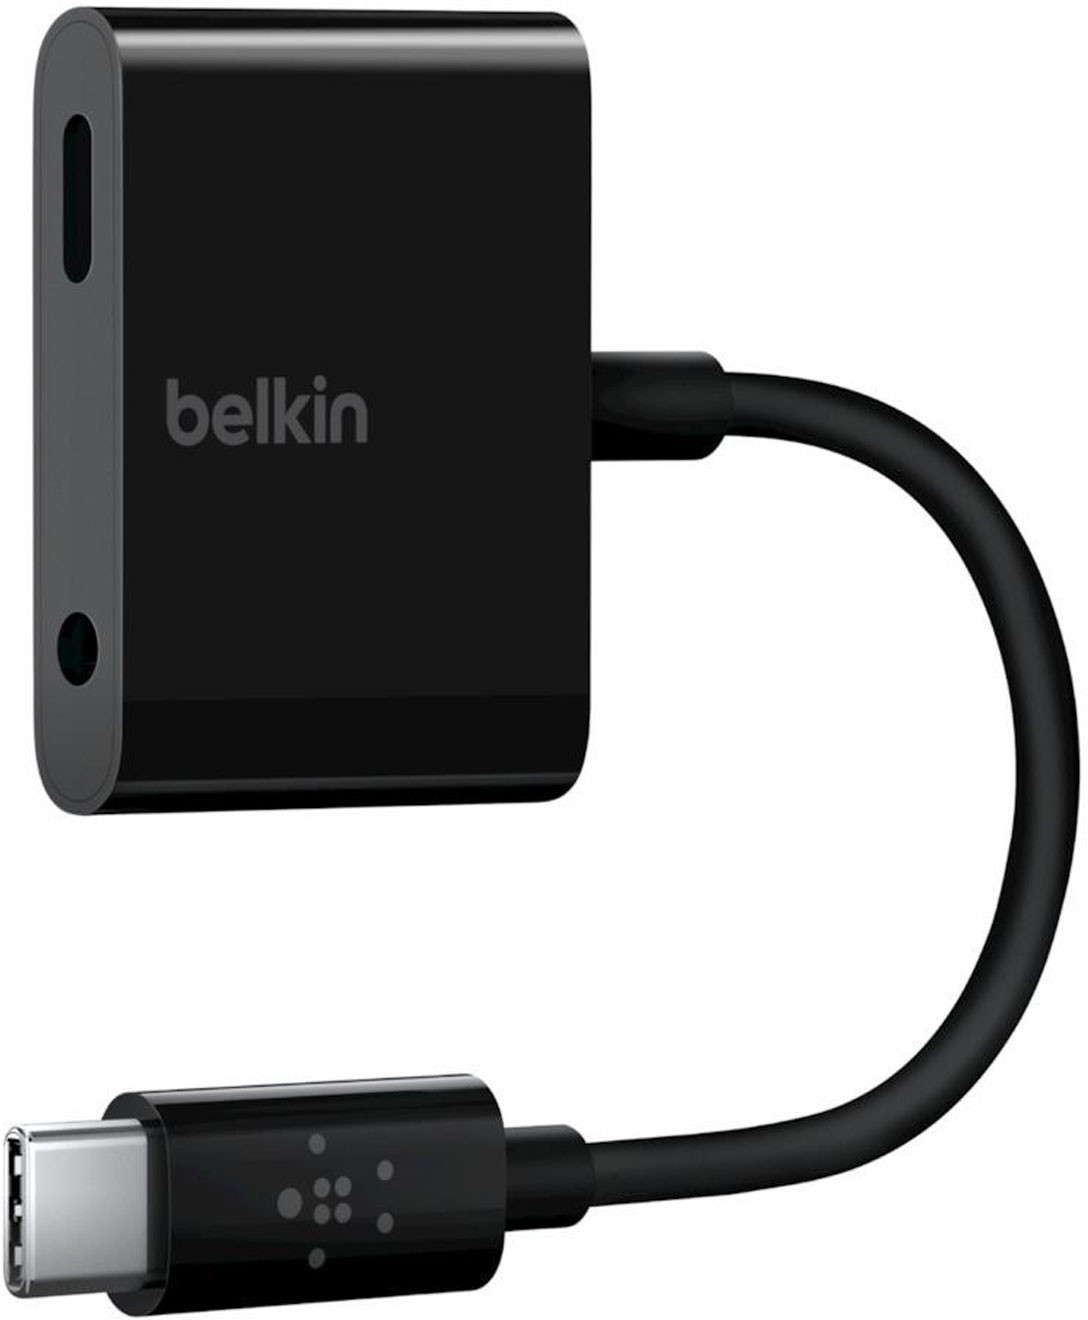 Photos - Cable (video, audio, USB) Belkin F7U080btBLK 